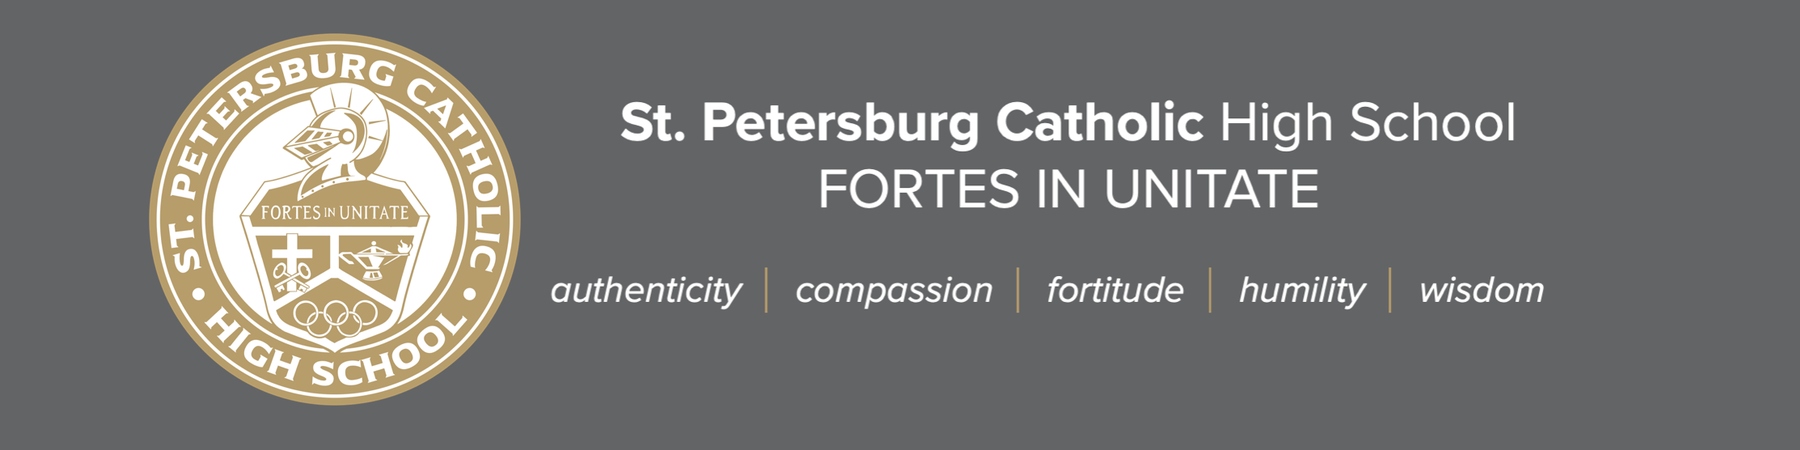 St Petersburg Catholic High School